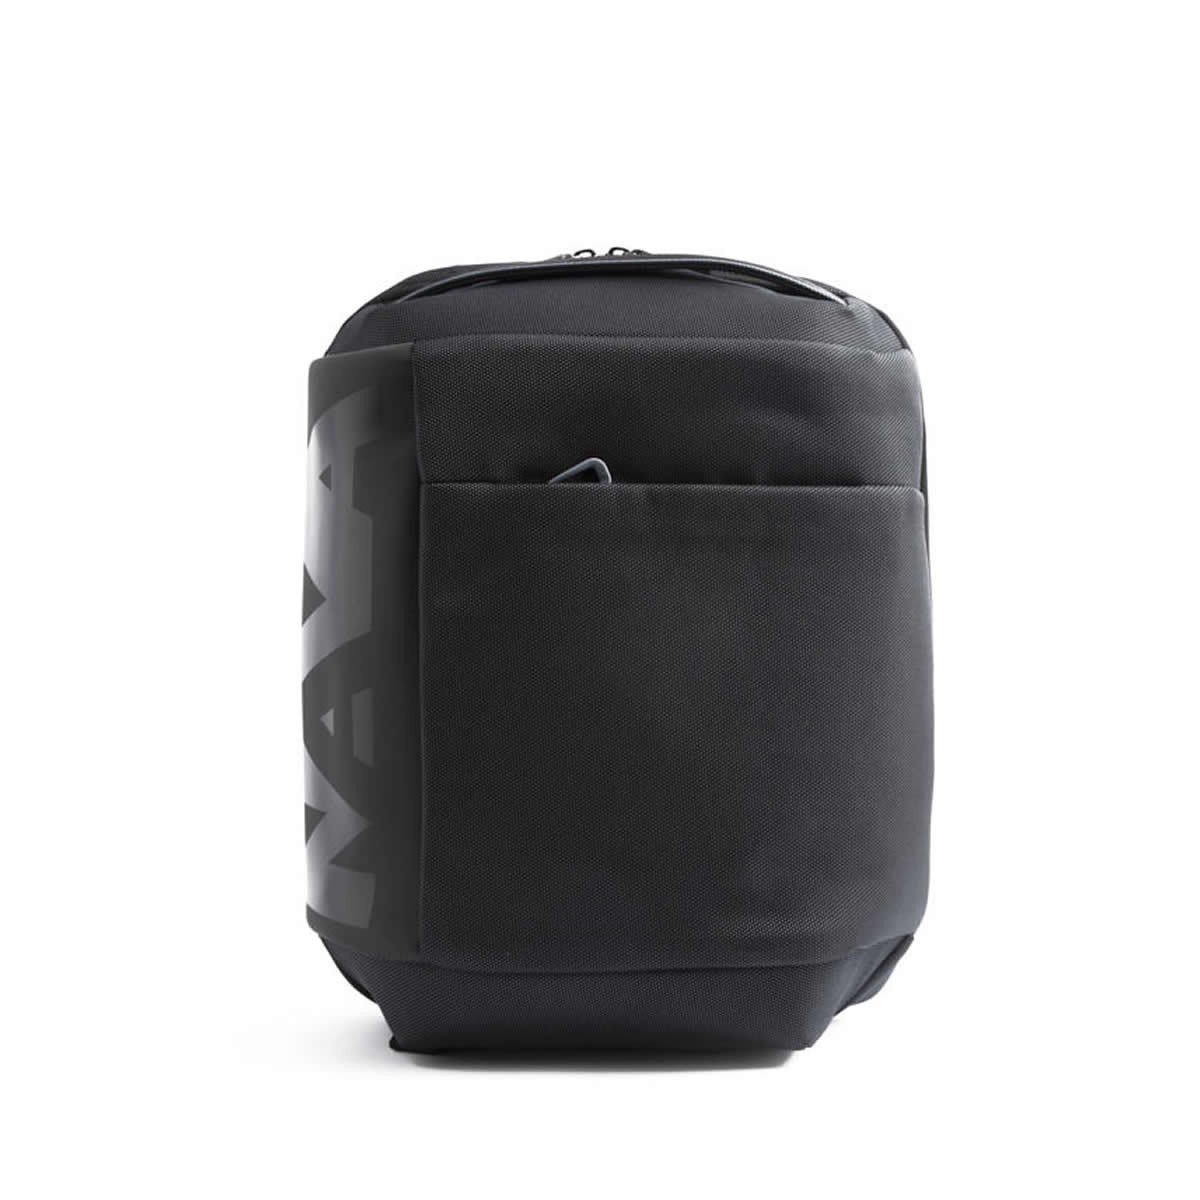 NAVA Design CROSS Backpack Grey/Black - Τσάντα πλάτης 15.6''